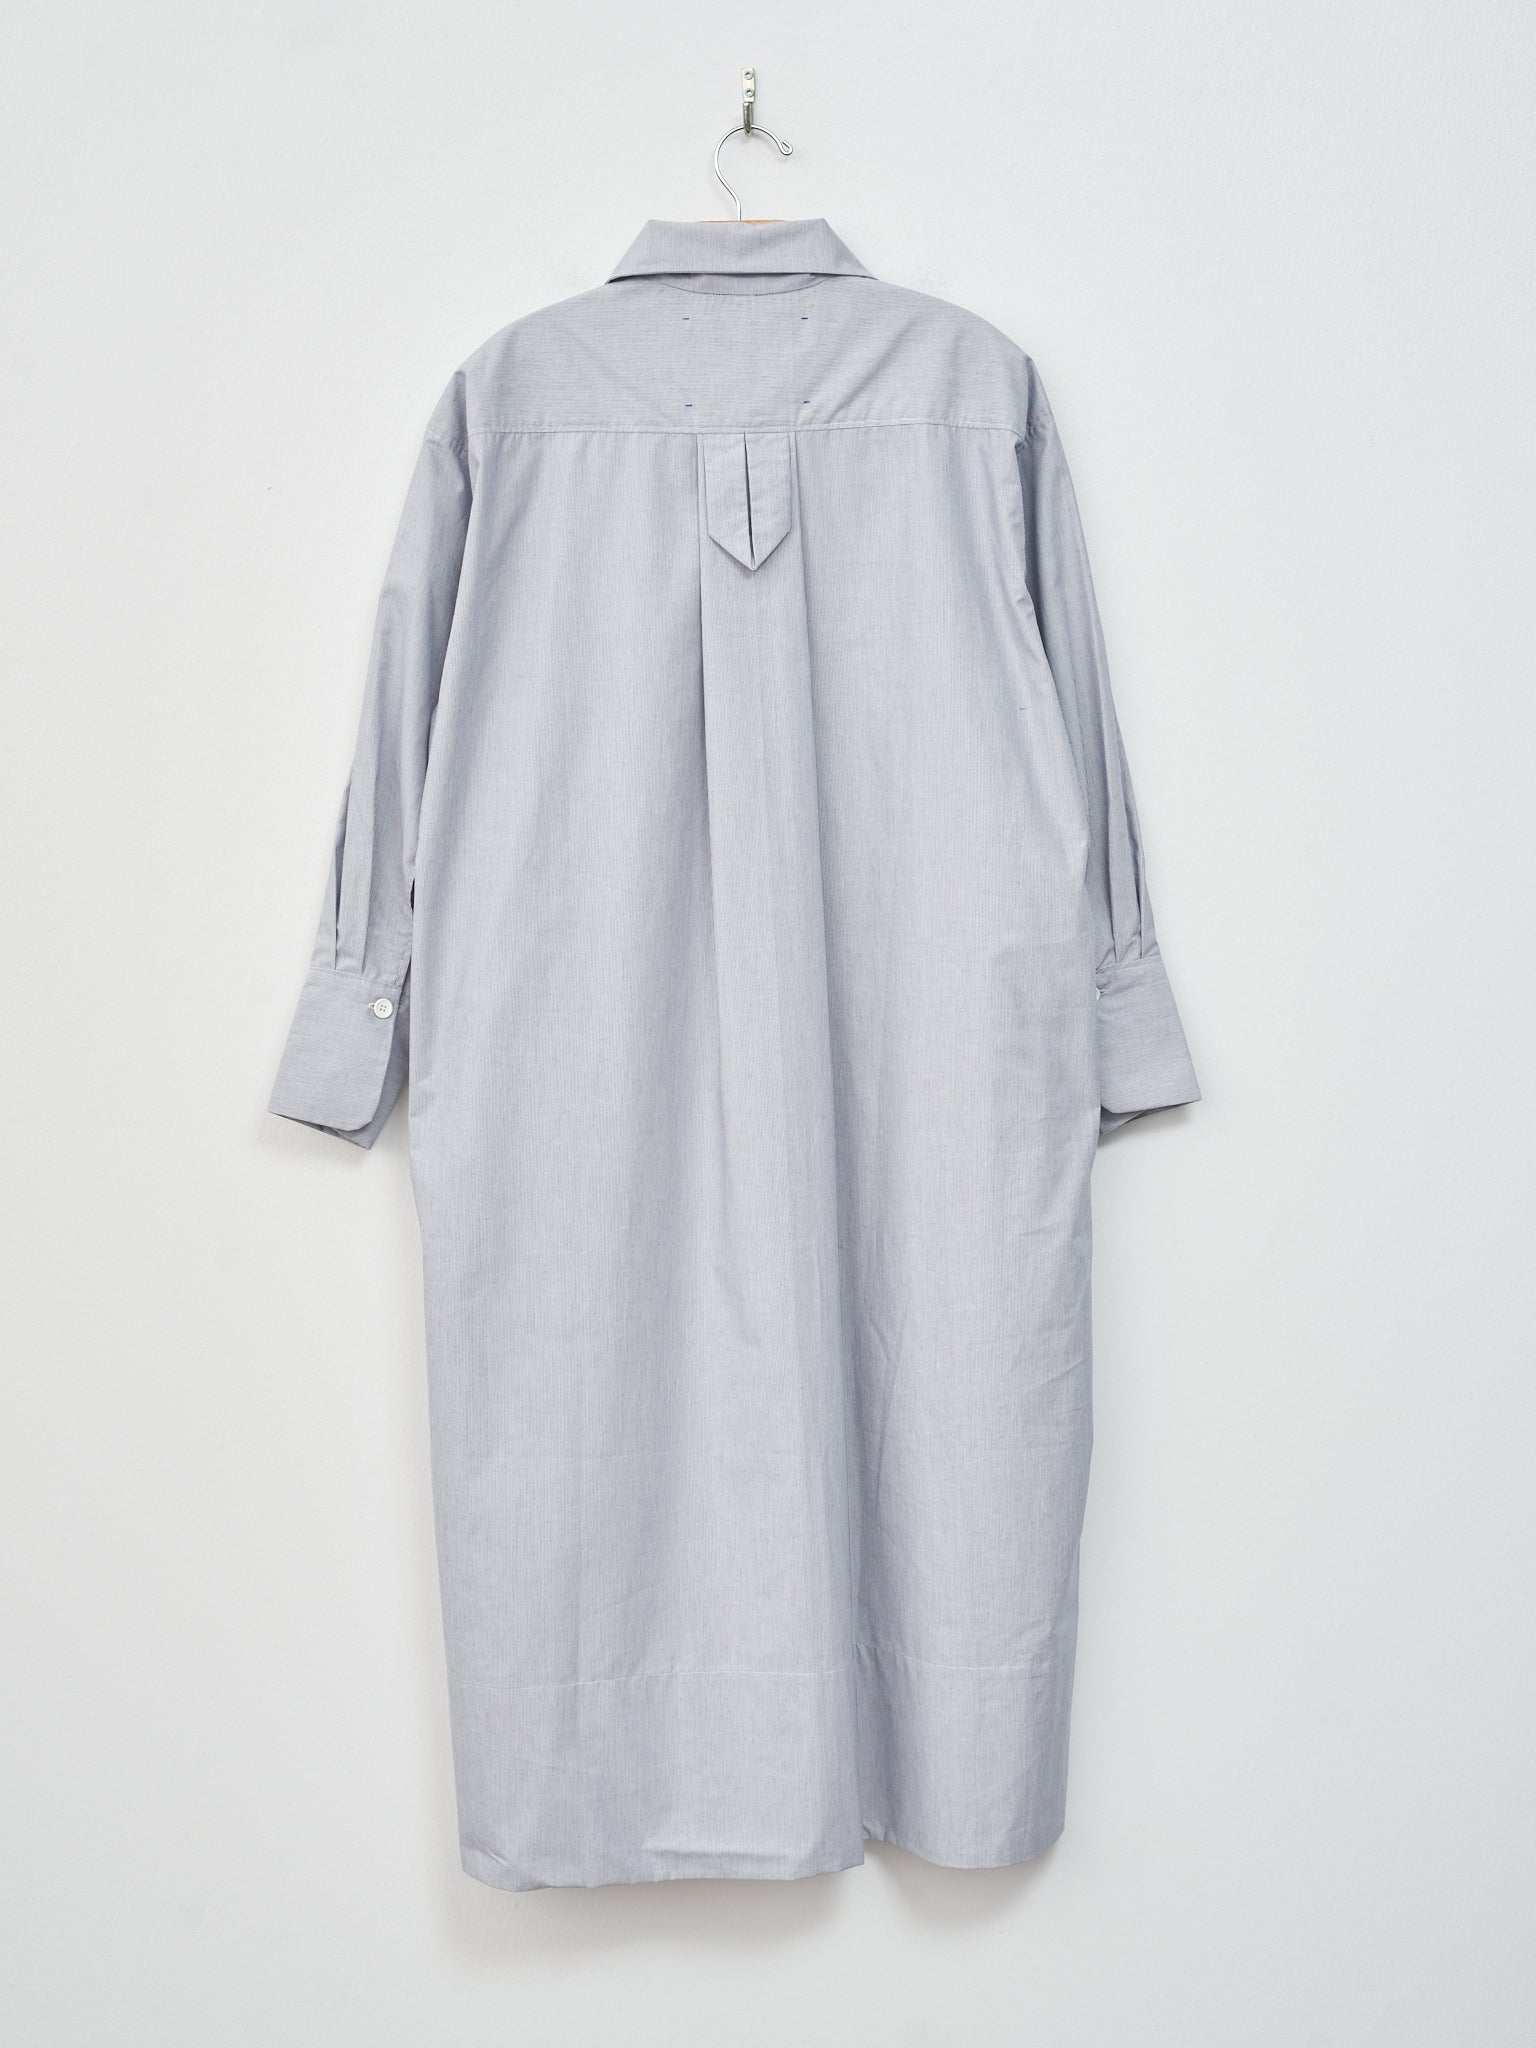 Namu Shop - Studio de Lostanges Long Collar Dress - Blue Stripe